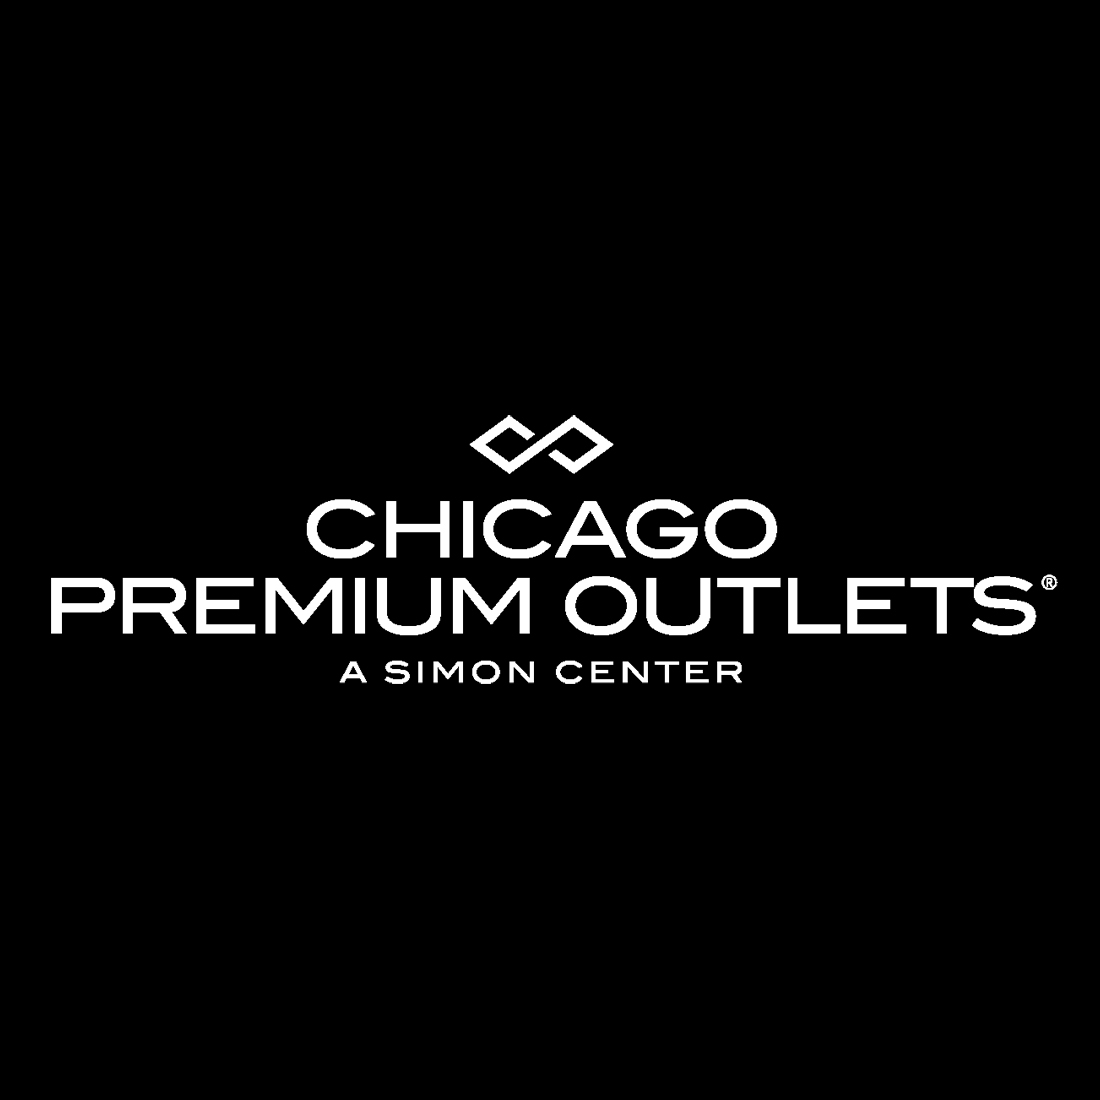 Chicago Premium Outlets